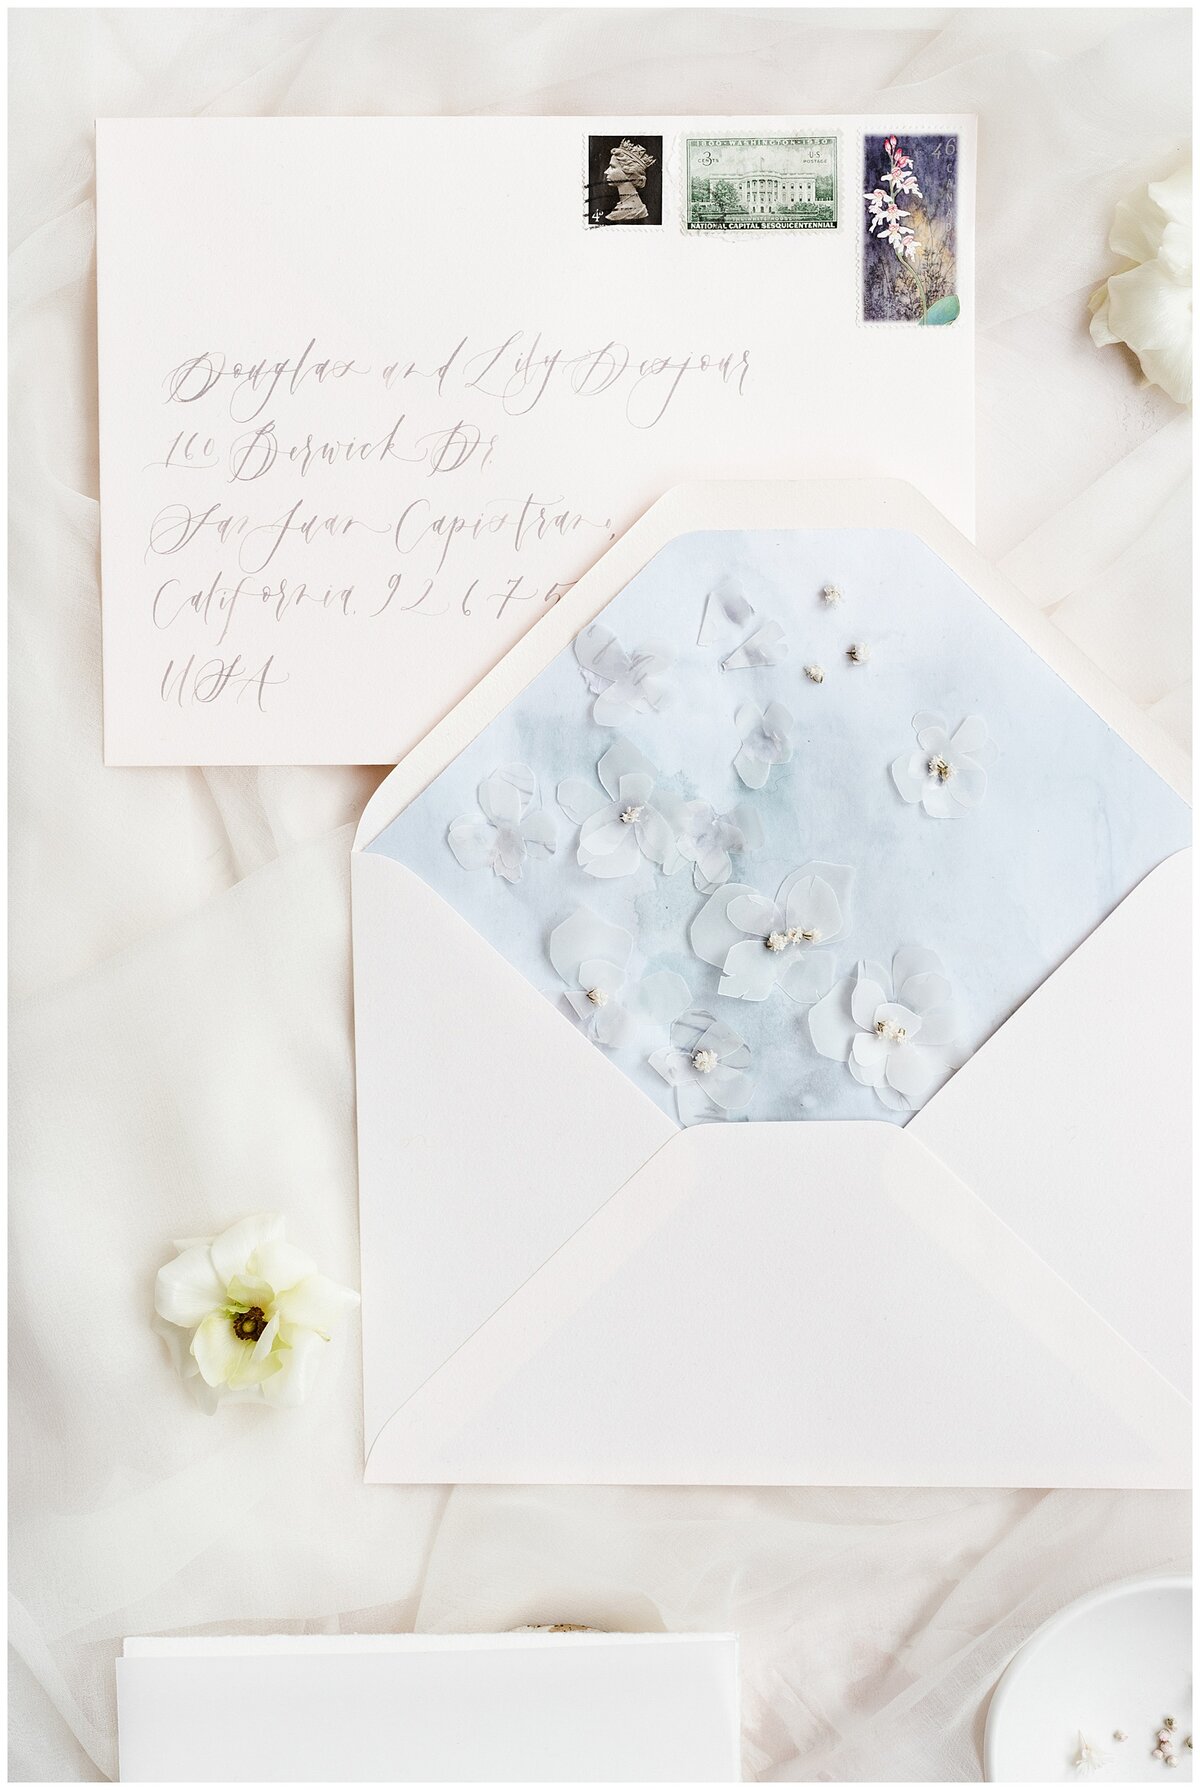 sharpe-stationery-and-printing-wedding-invitation